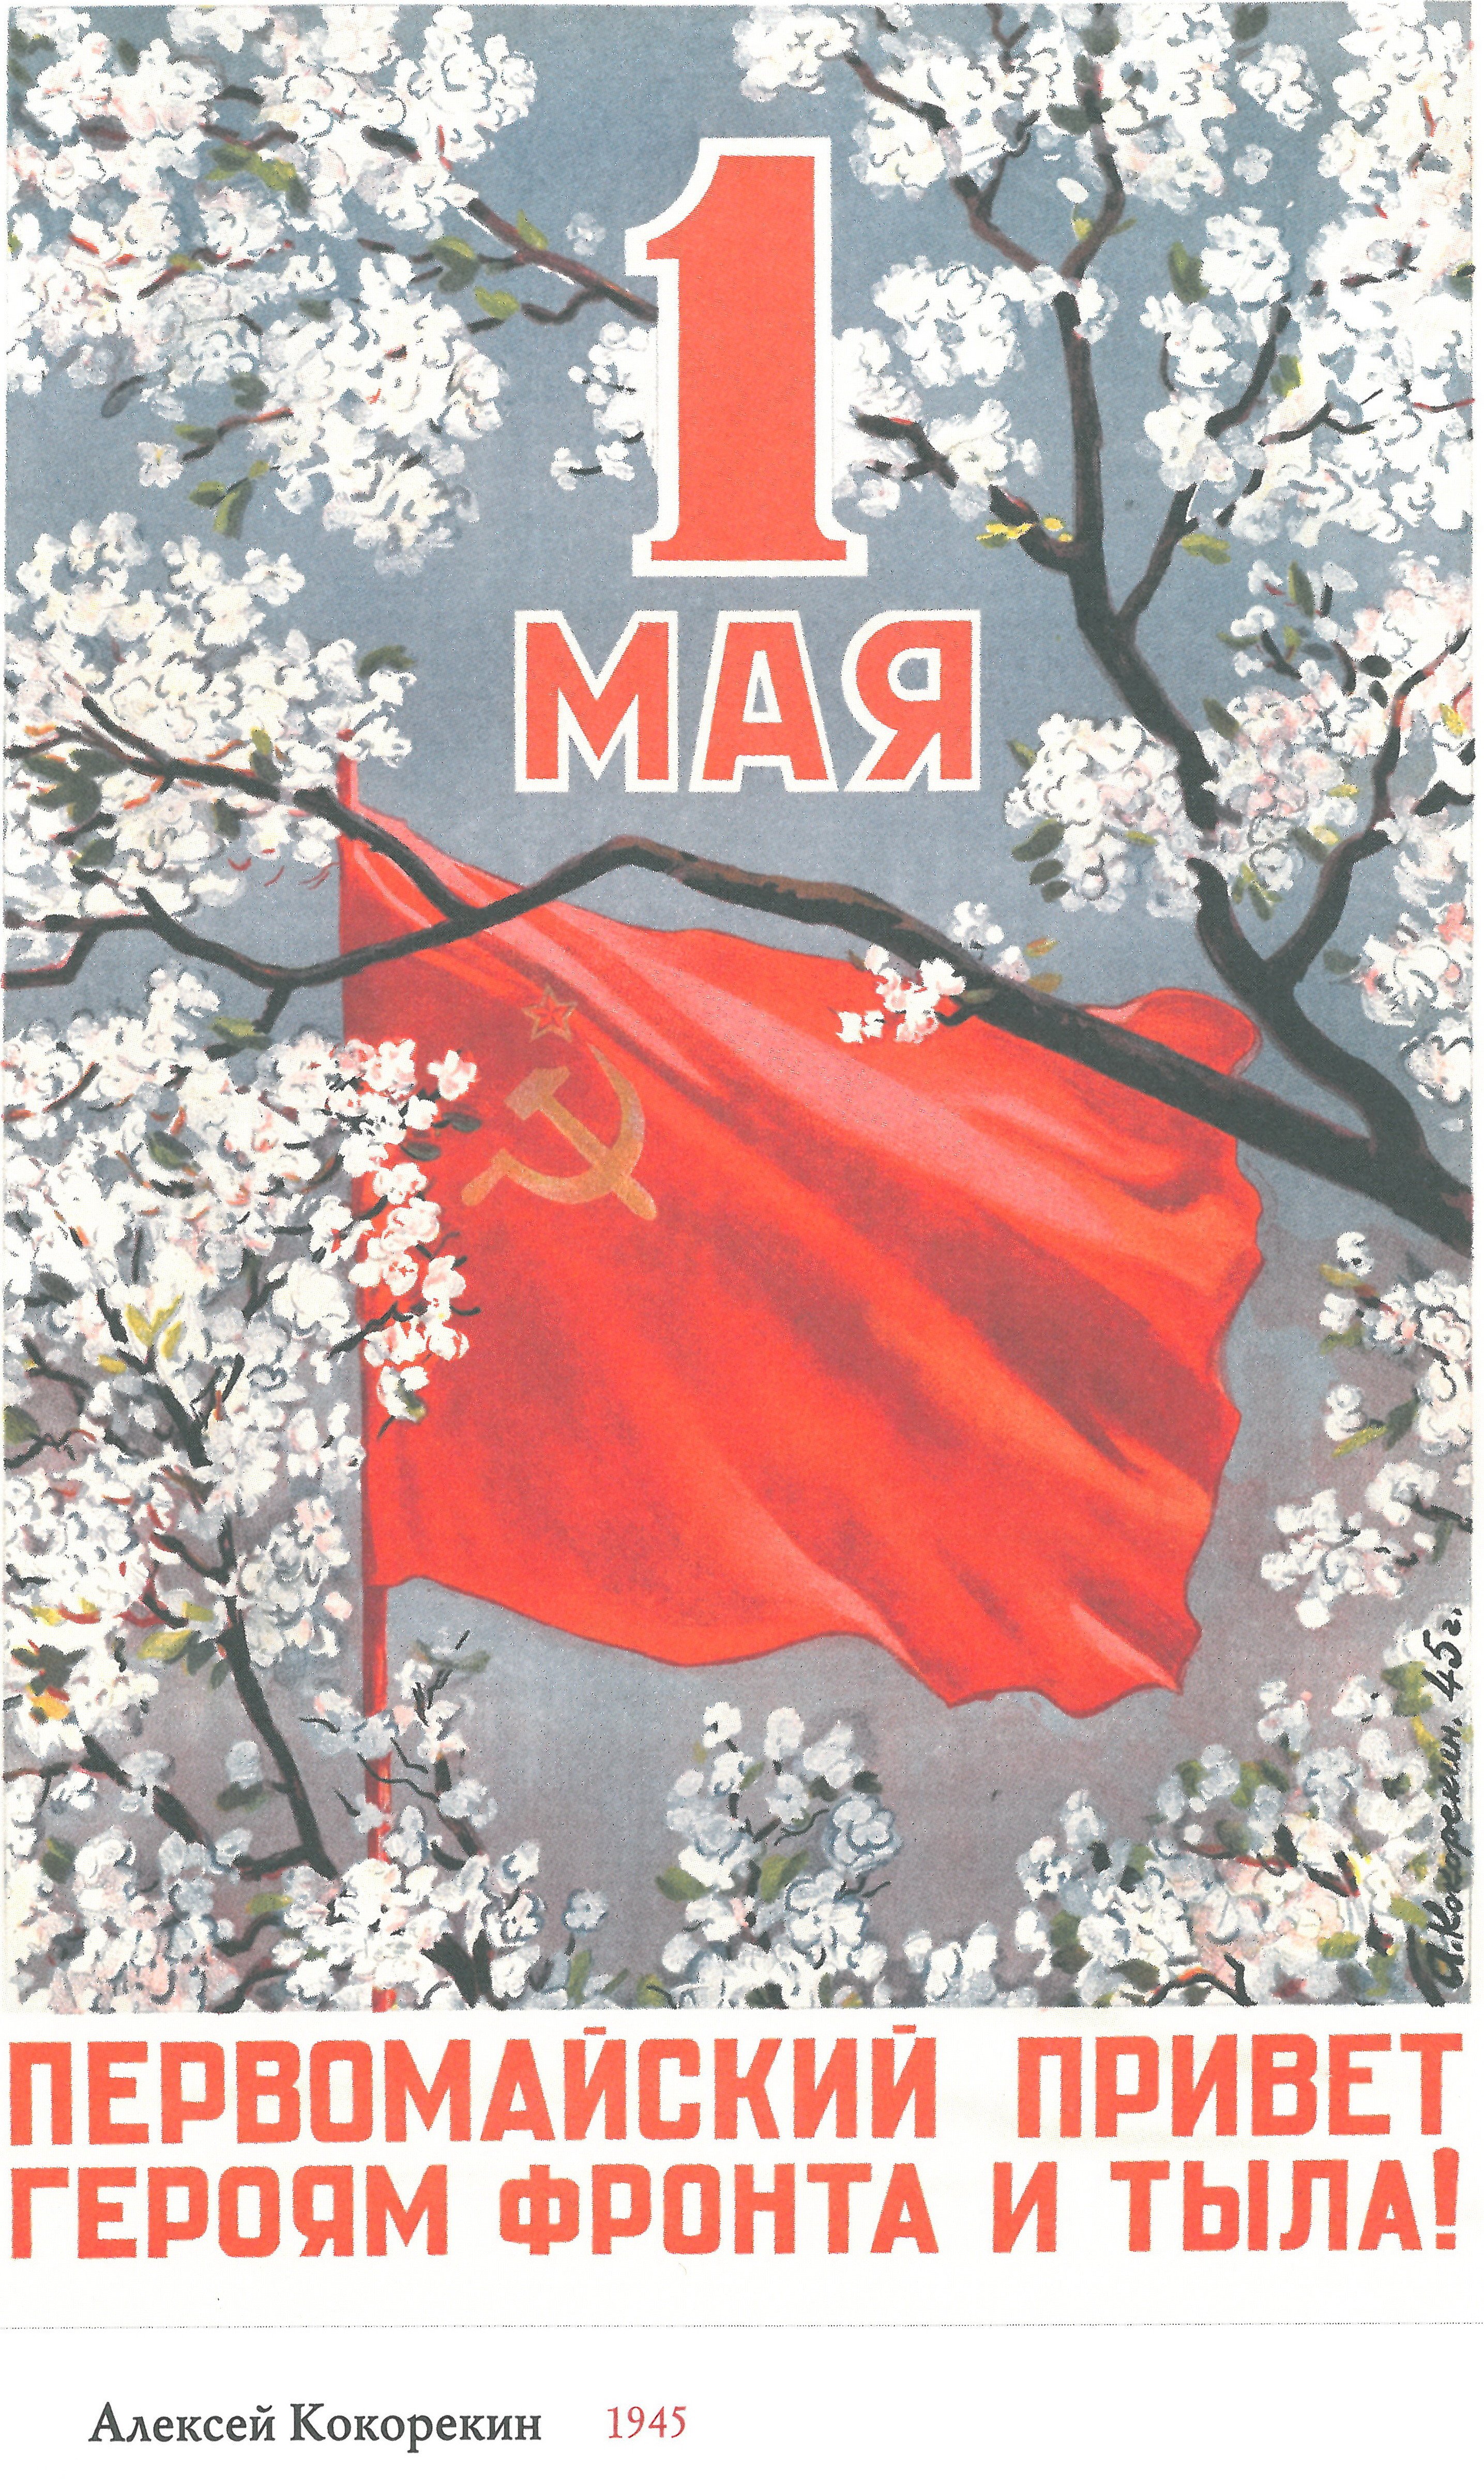 Альбомы 1 мая. 1 Мая. Мир труд май. 1 Мая плакат. 1 Мая советские плакаты.